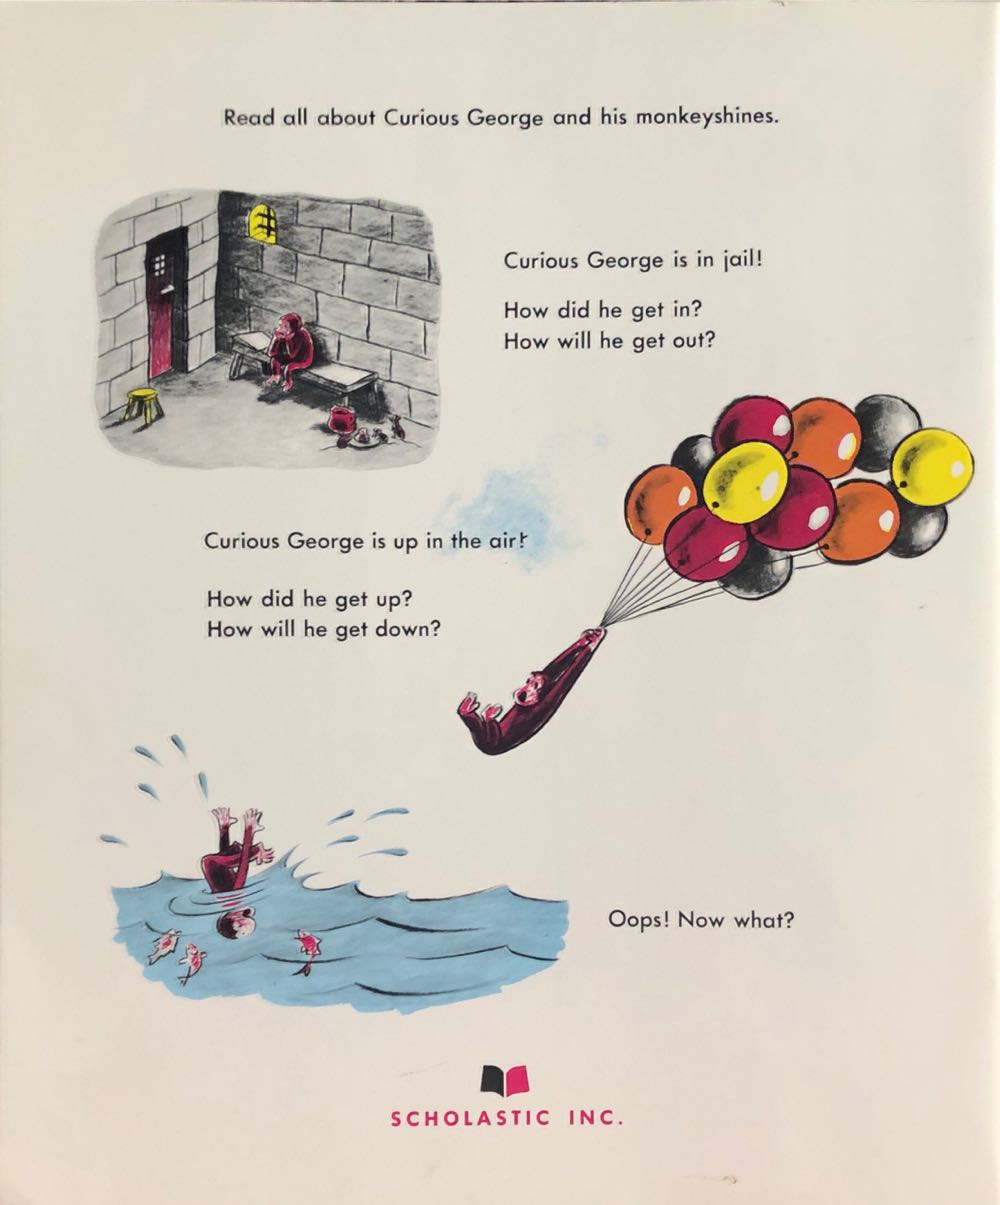 Curious George - Dalmatian Press (Scholastic Inc. - Paperback) book collectible [Barcode 9780590020435] - Main Image 2